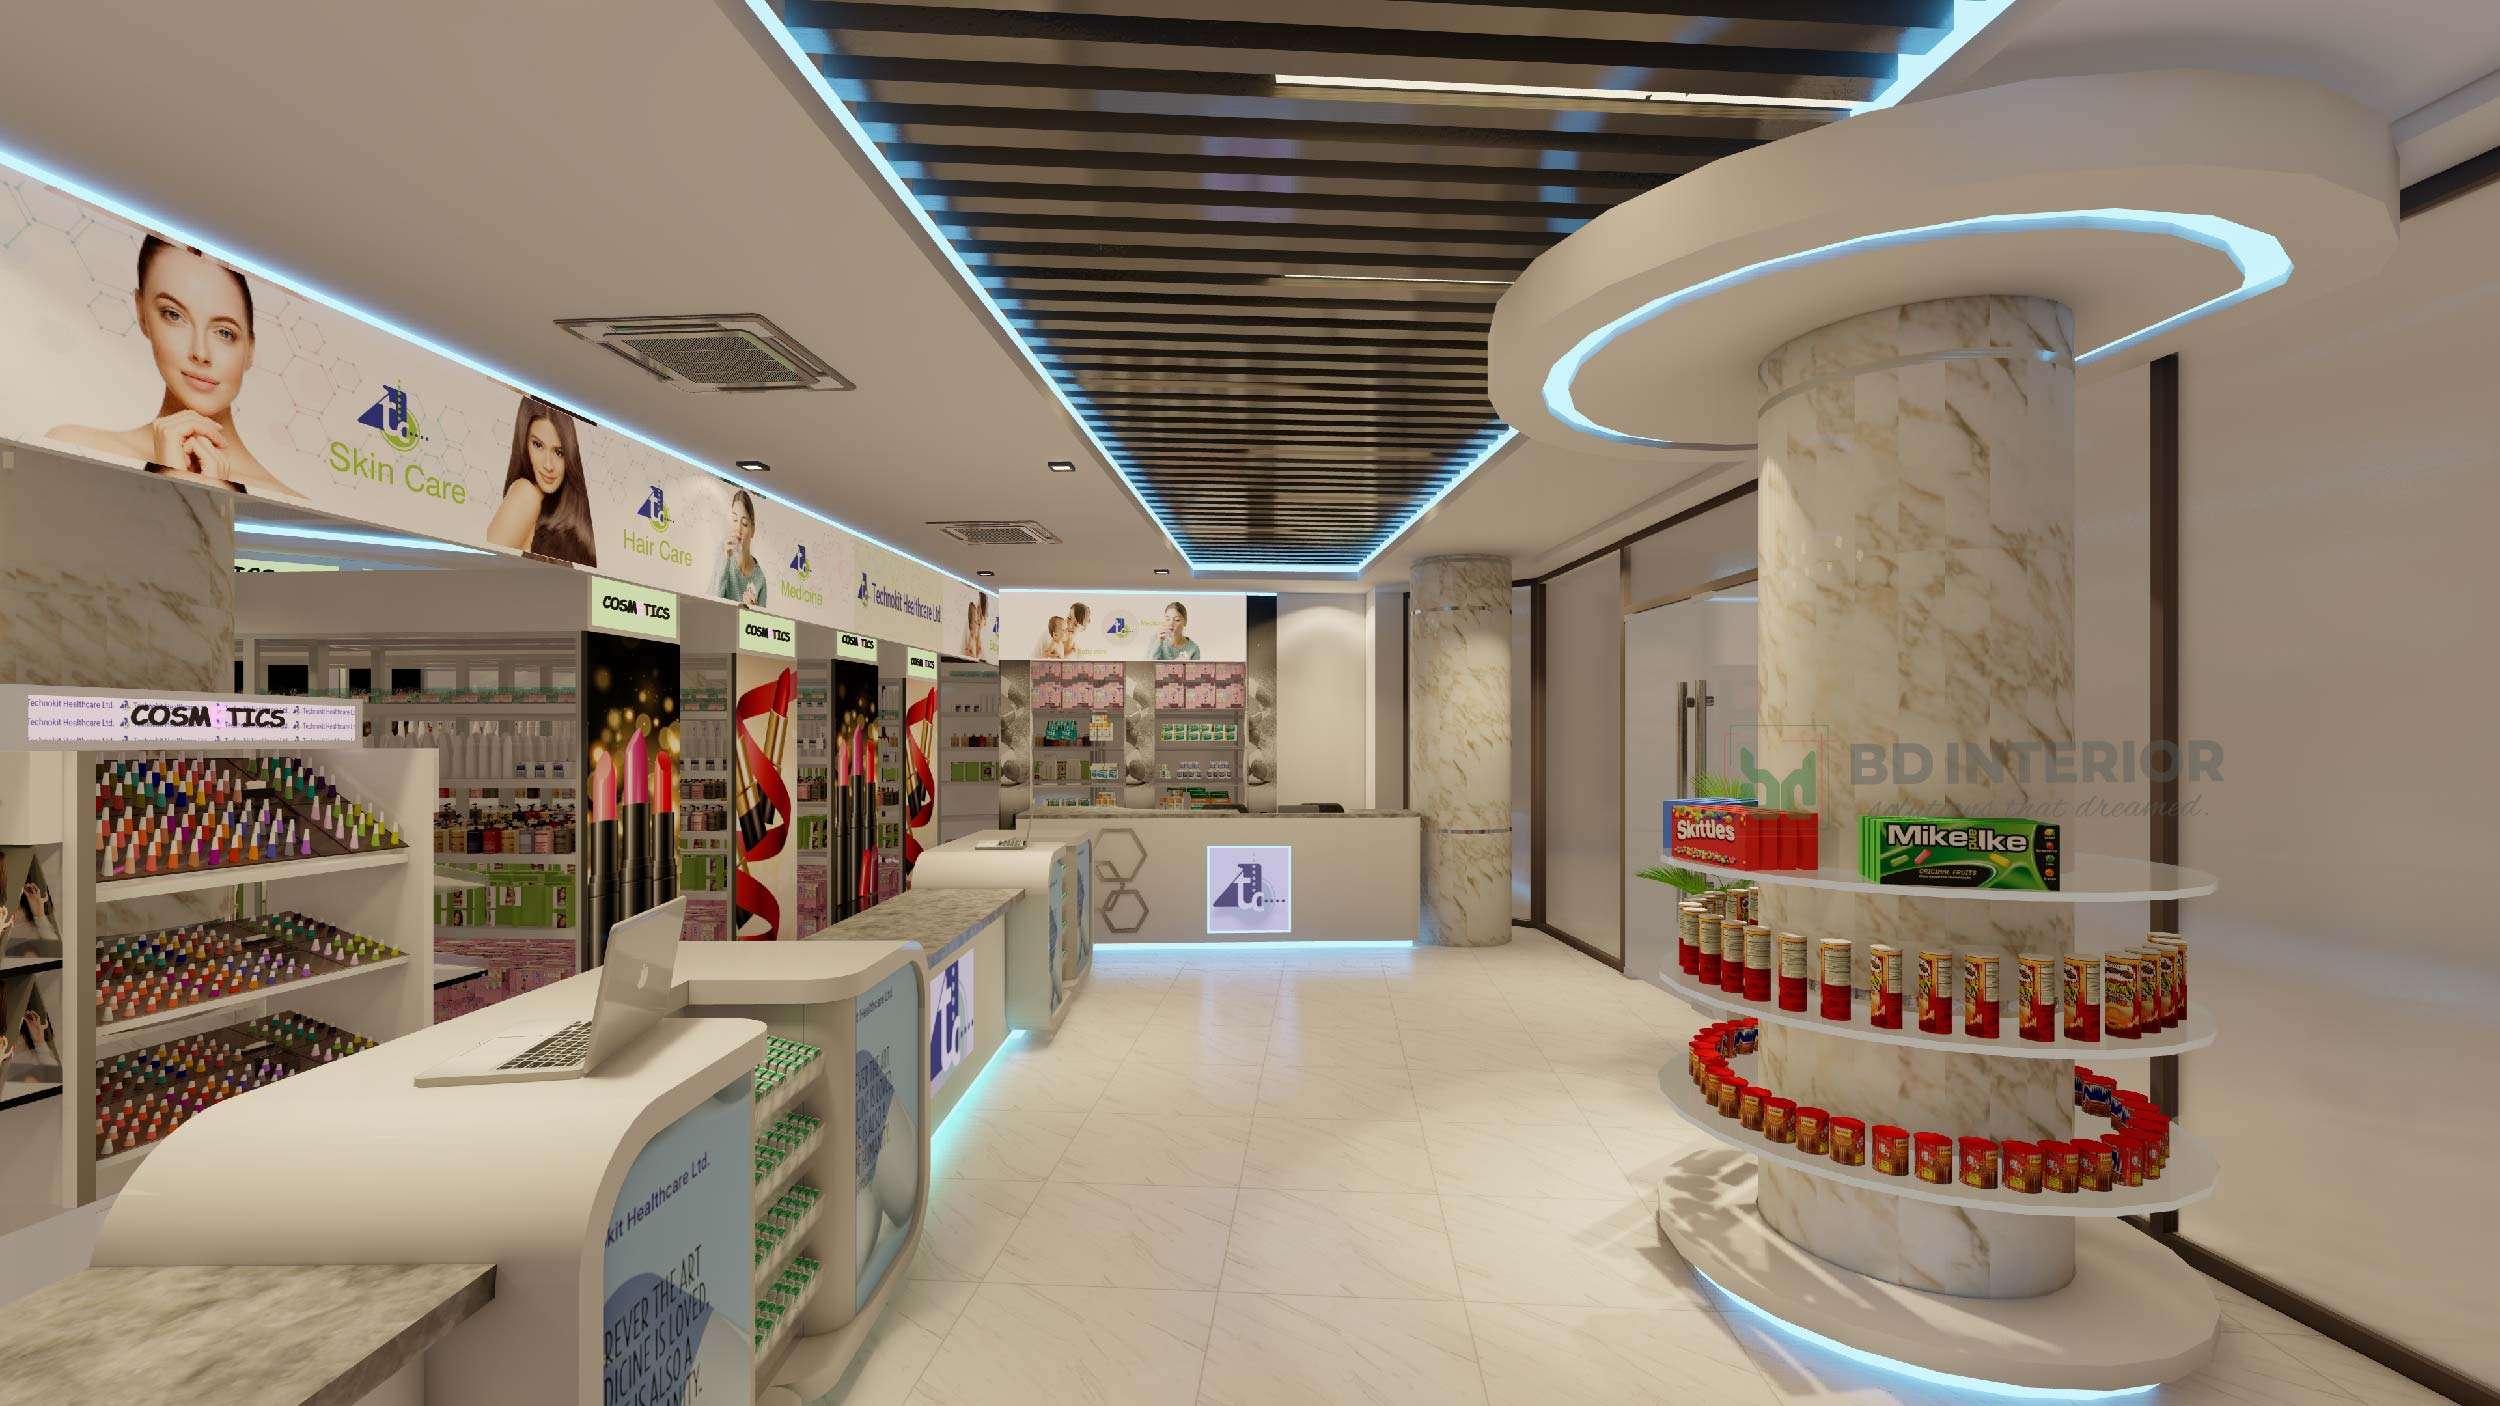 showroom interior design in bangladesh ideas